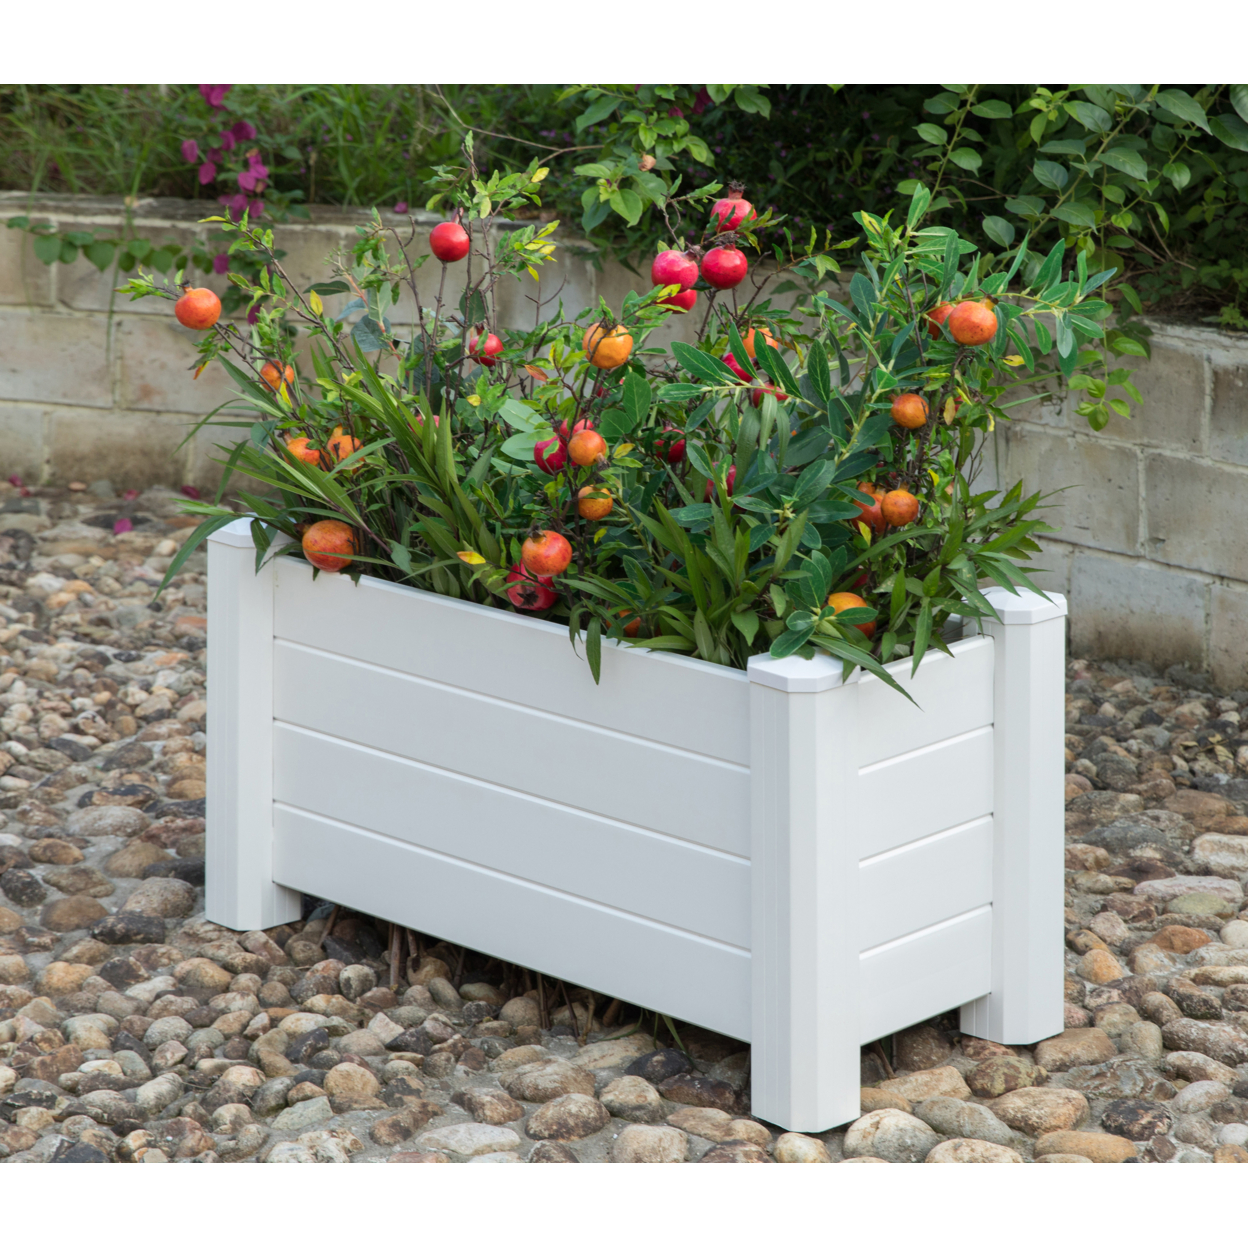 Gardenised White Vinyl Traditional Fence Design Garden Bed Elevated Screwless Raised Planter Box - 10.5 X 25.5